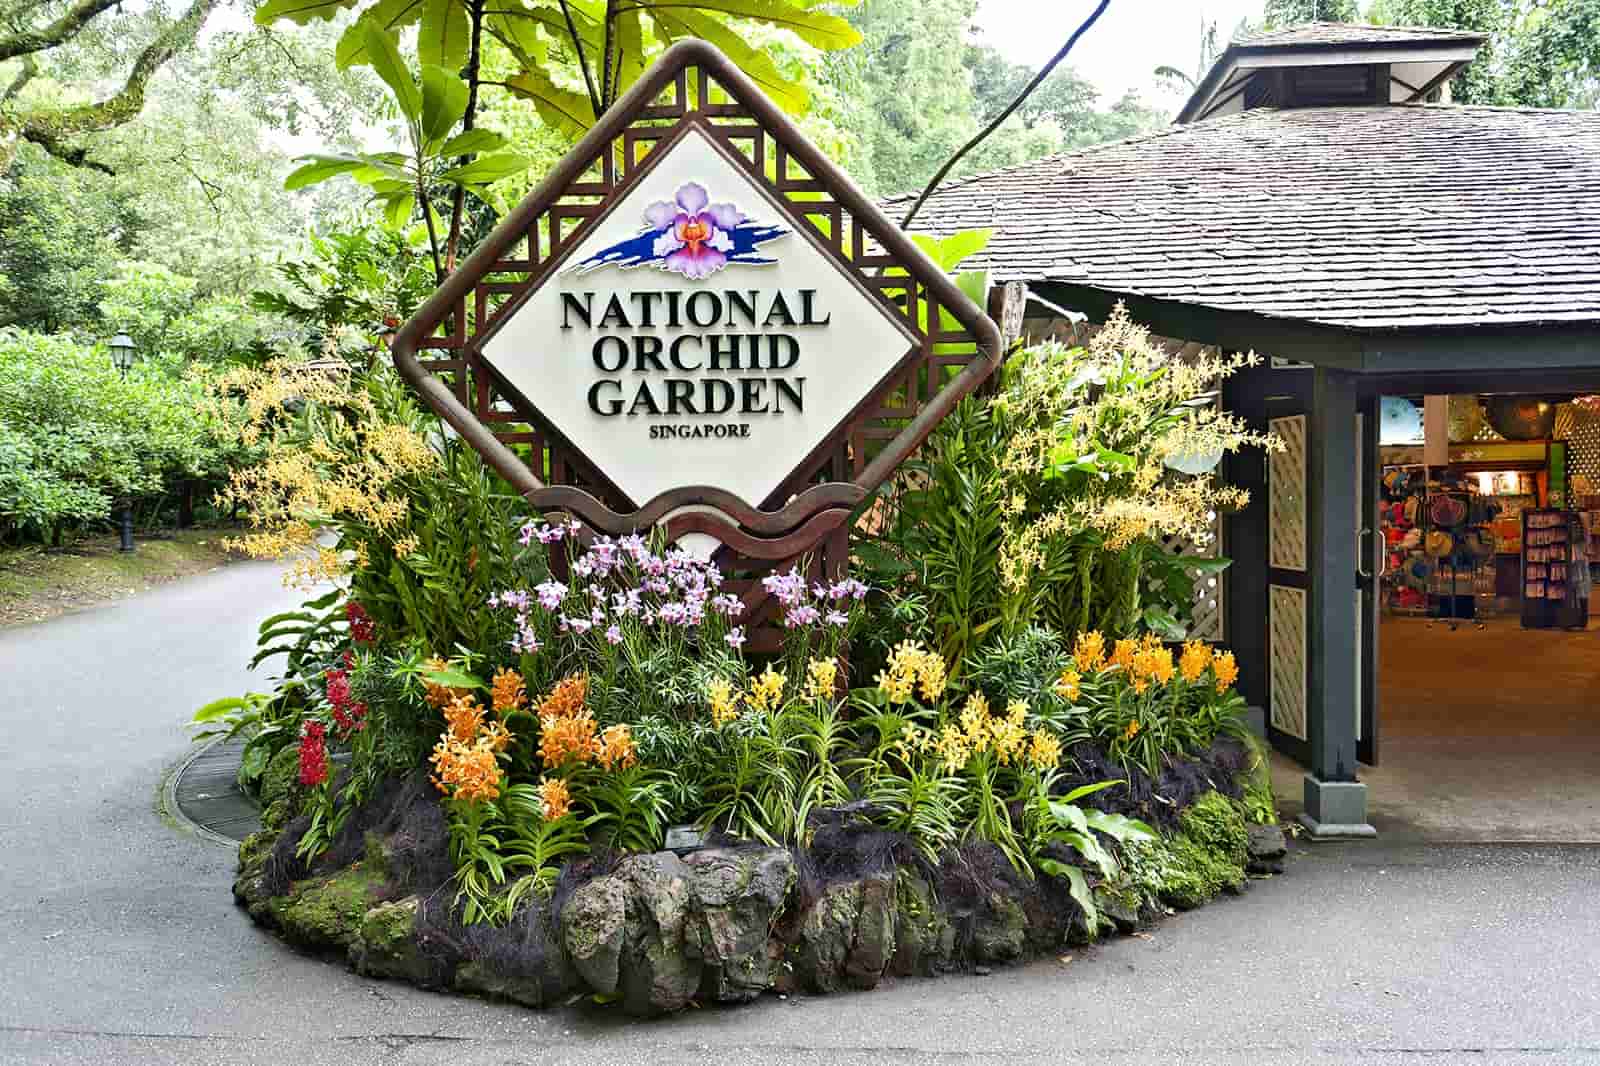 Vườn Lan Quốc gia (National Orchid Garden)